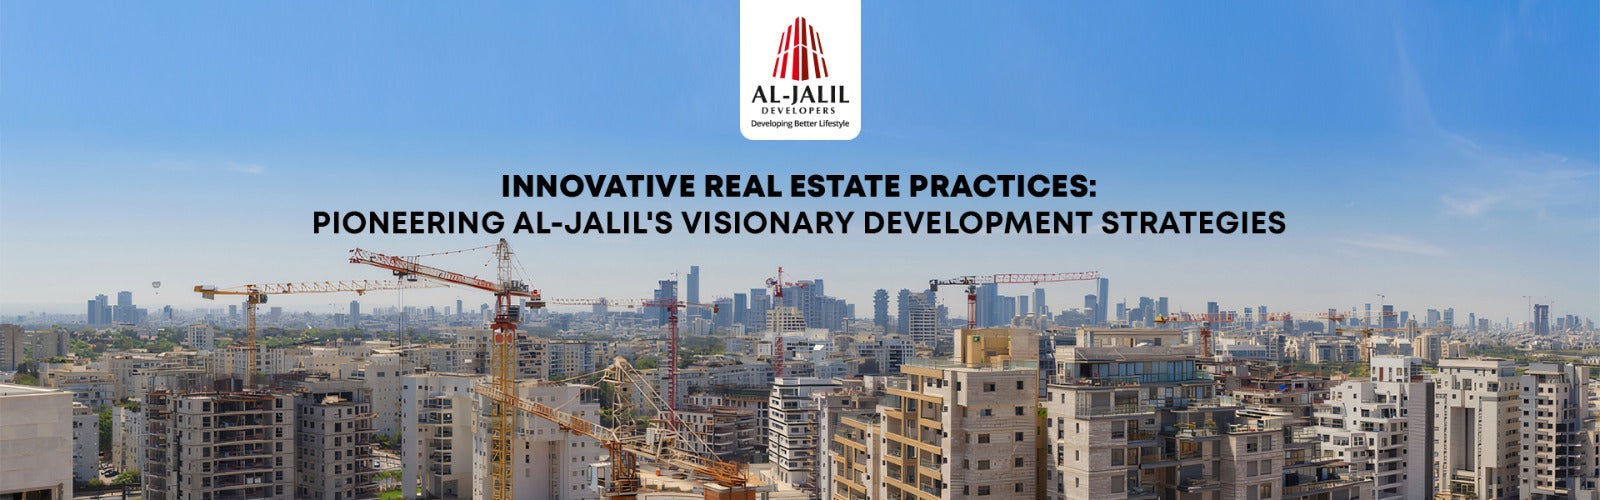 Innovative Real Estate Practices Pioneering Al-Jalil's Visionary Development Strategies